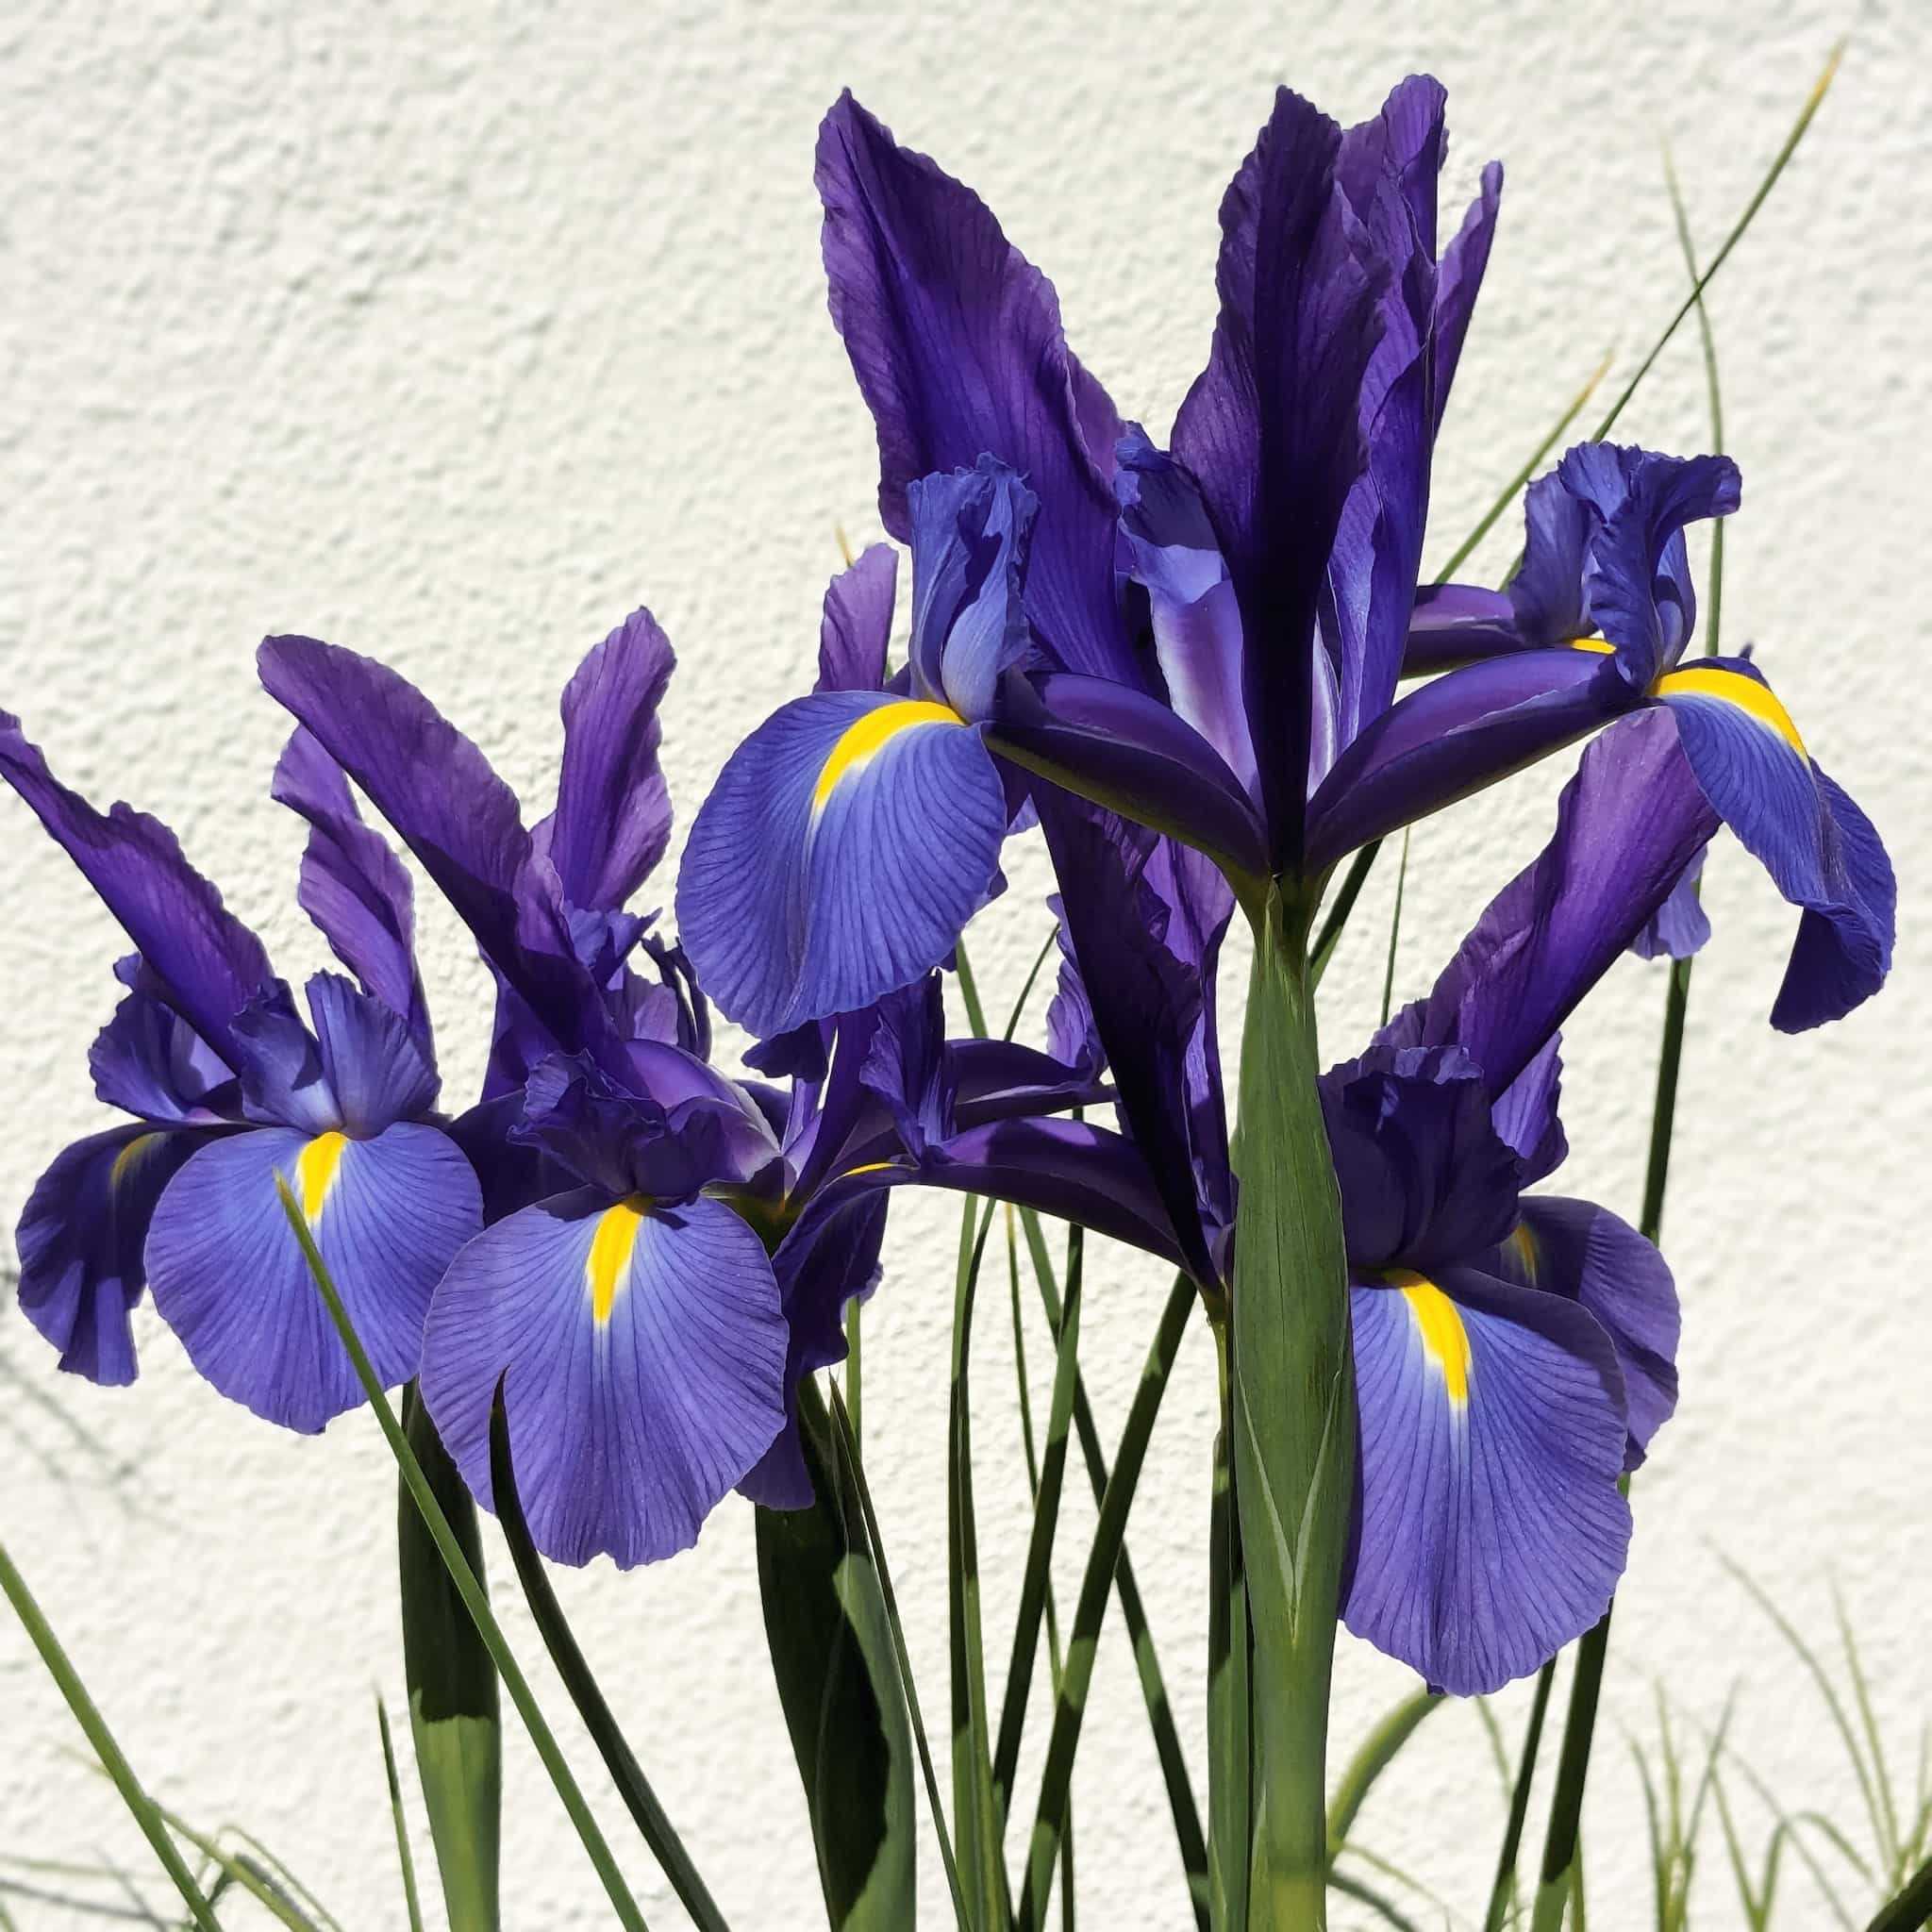 Large purple and yellow iris flowers